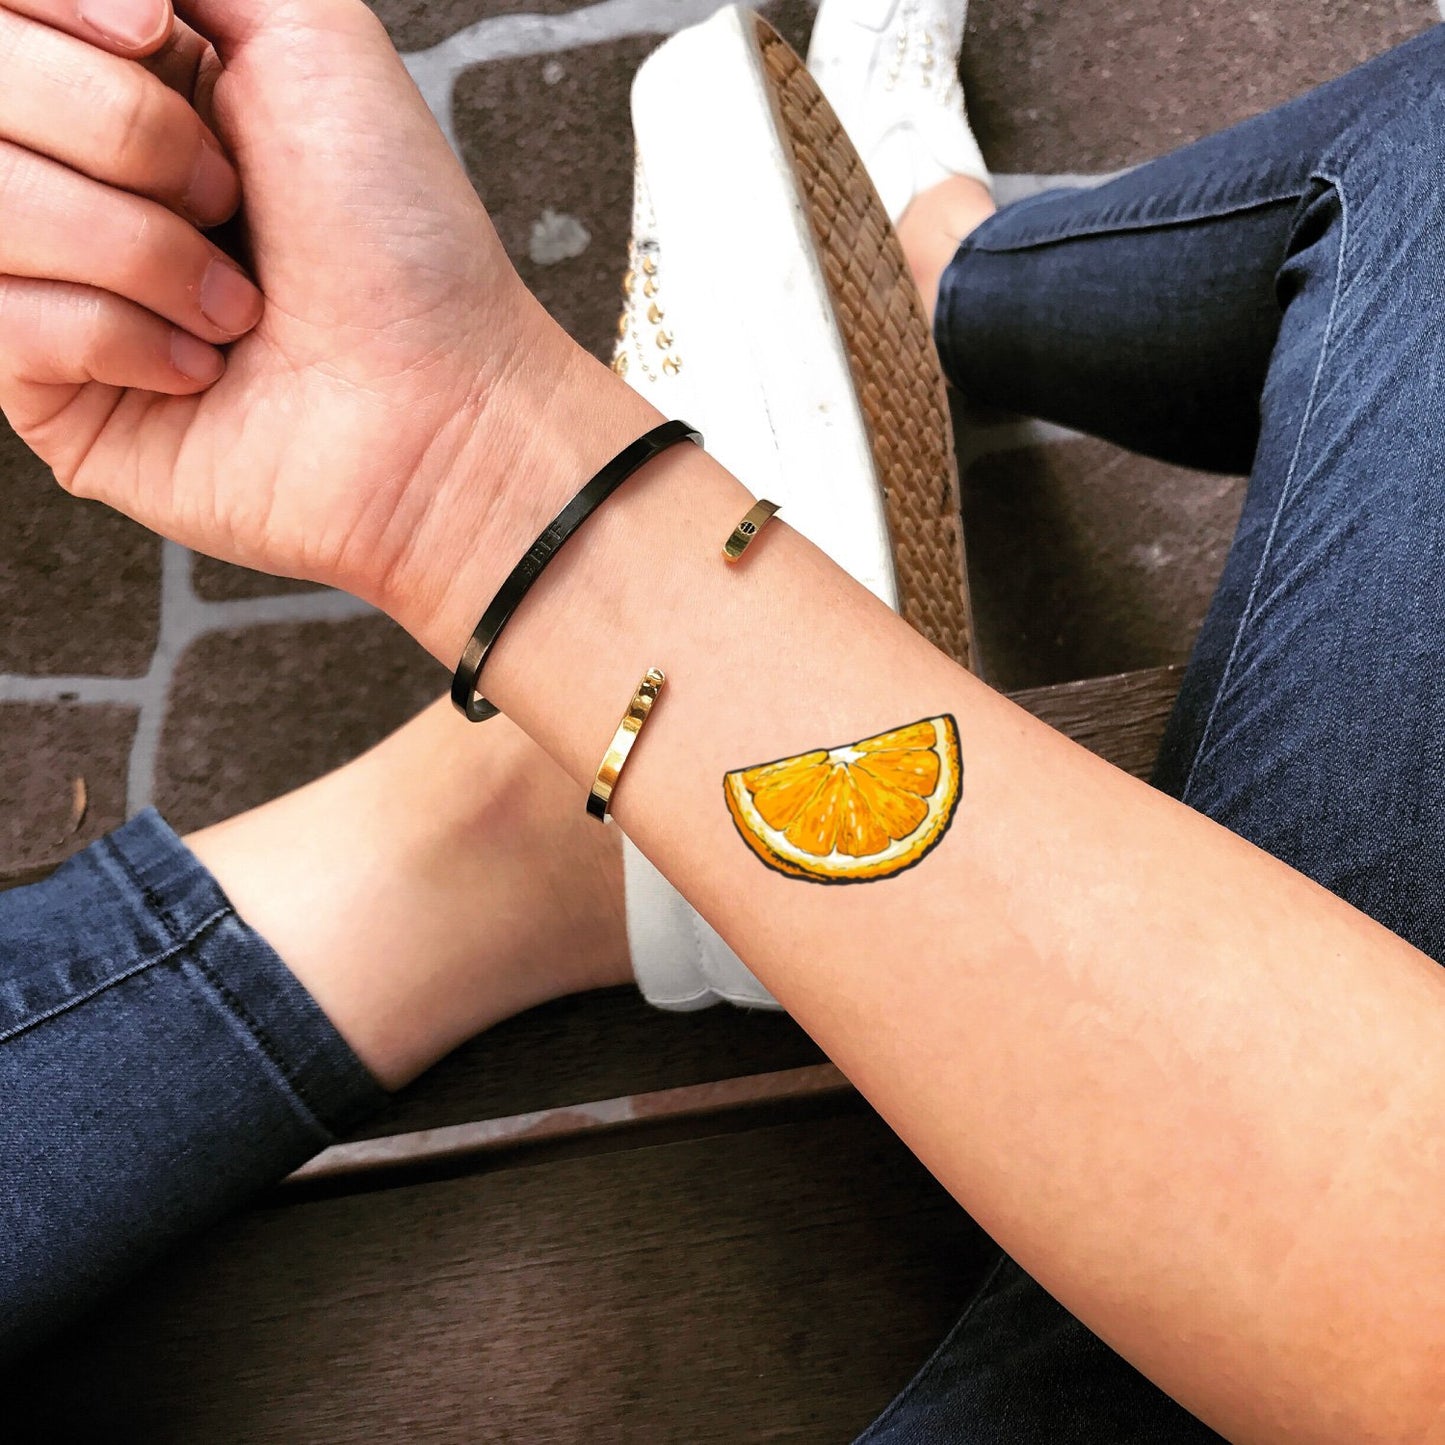 fake small orange food fruit color temporary tattoo sticker design idea on wrist